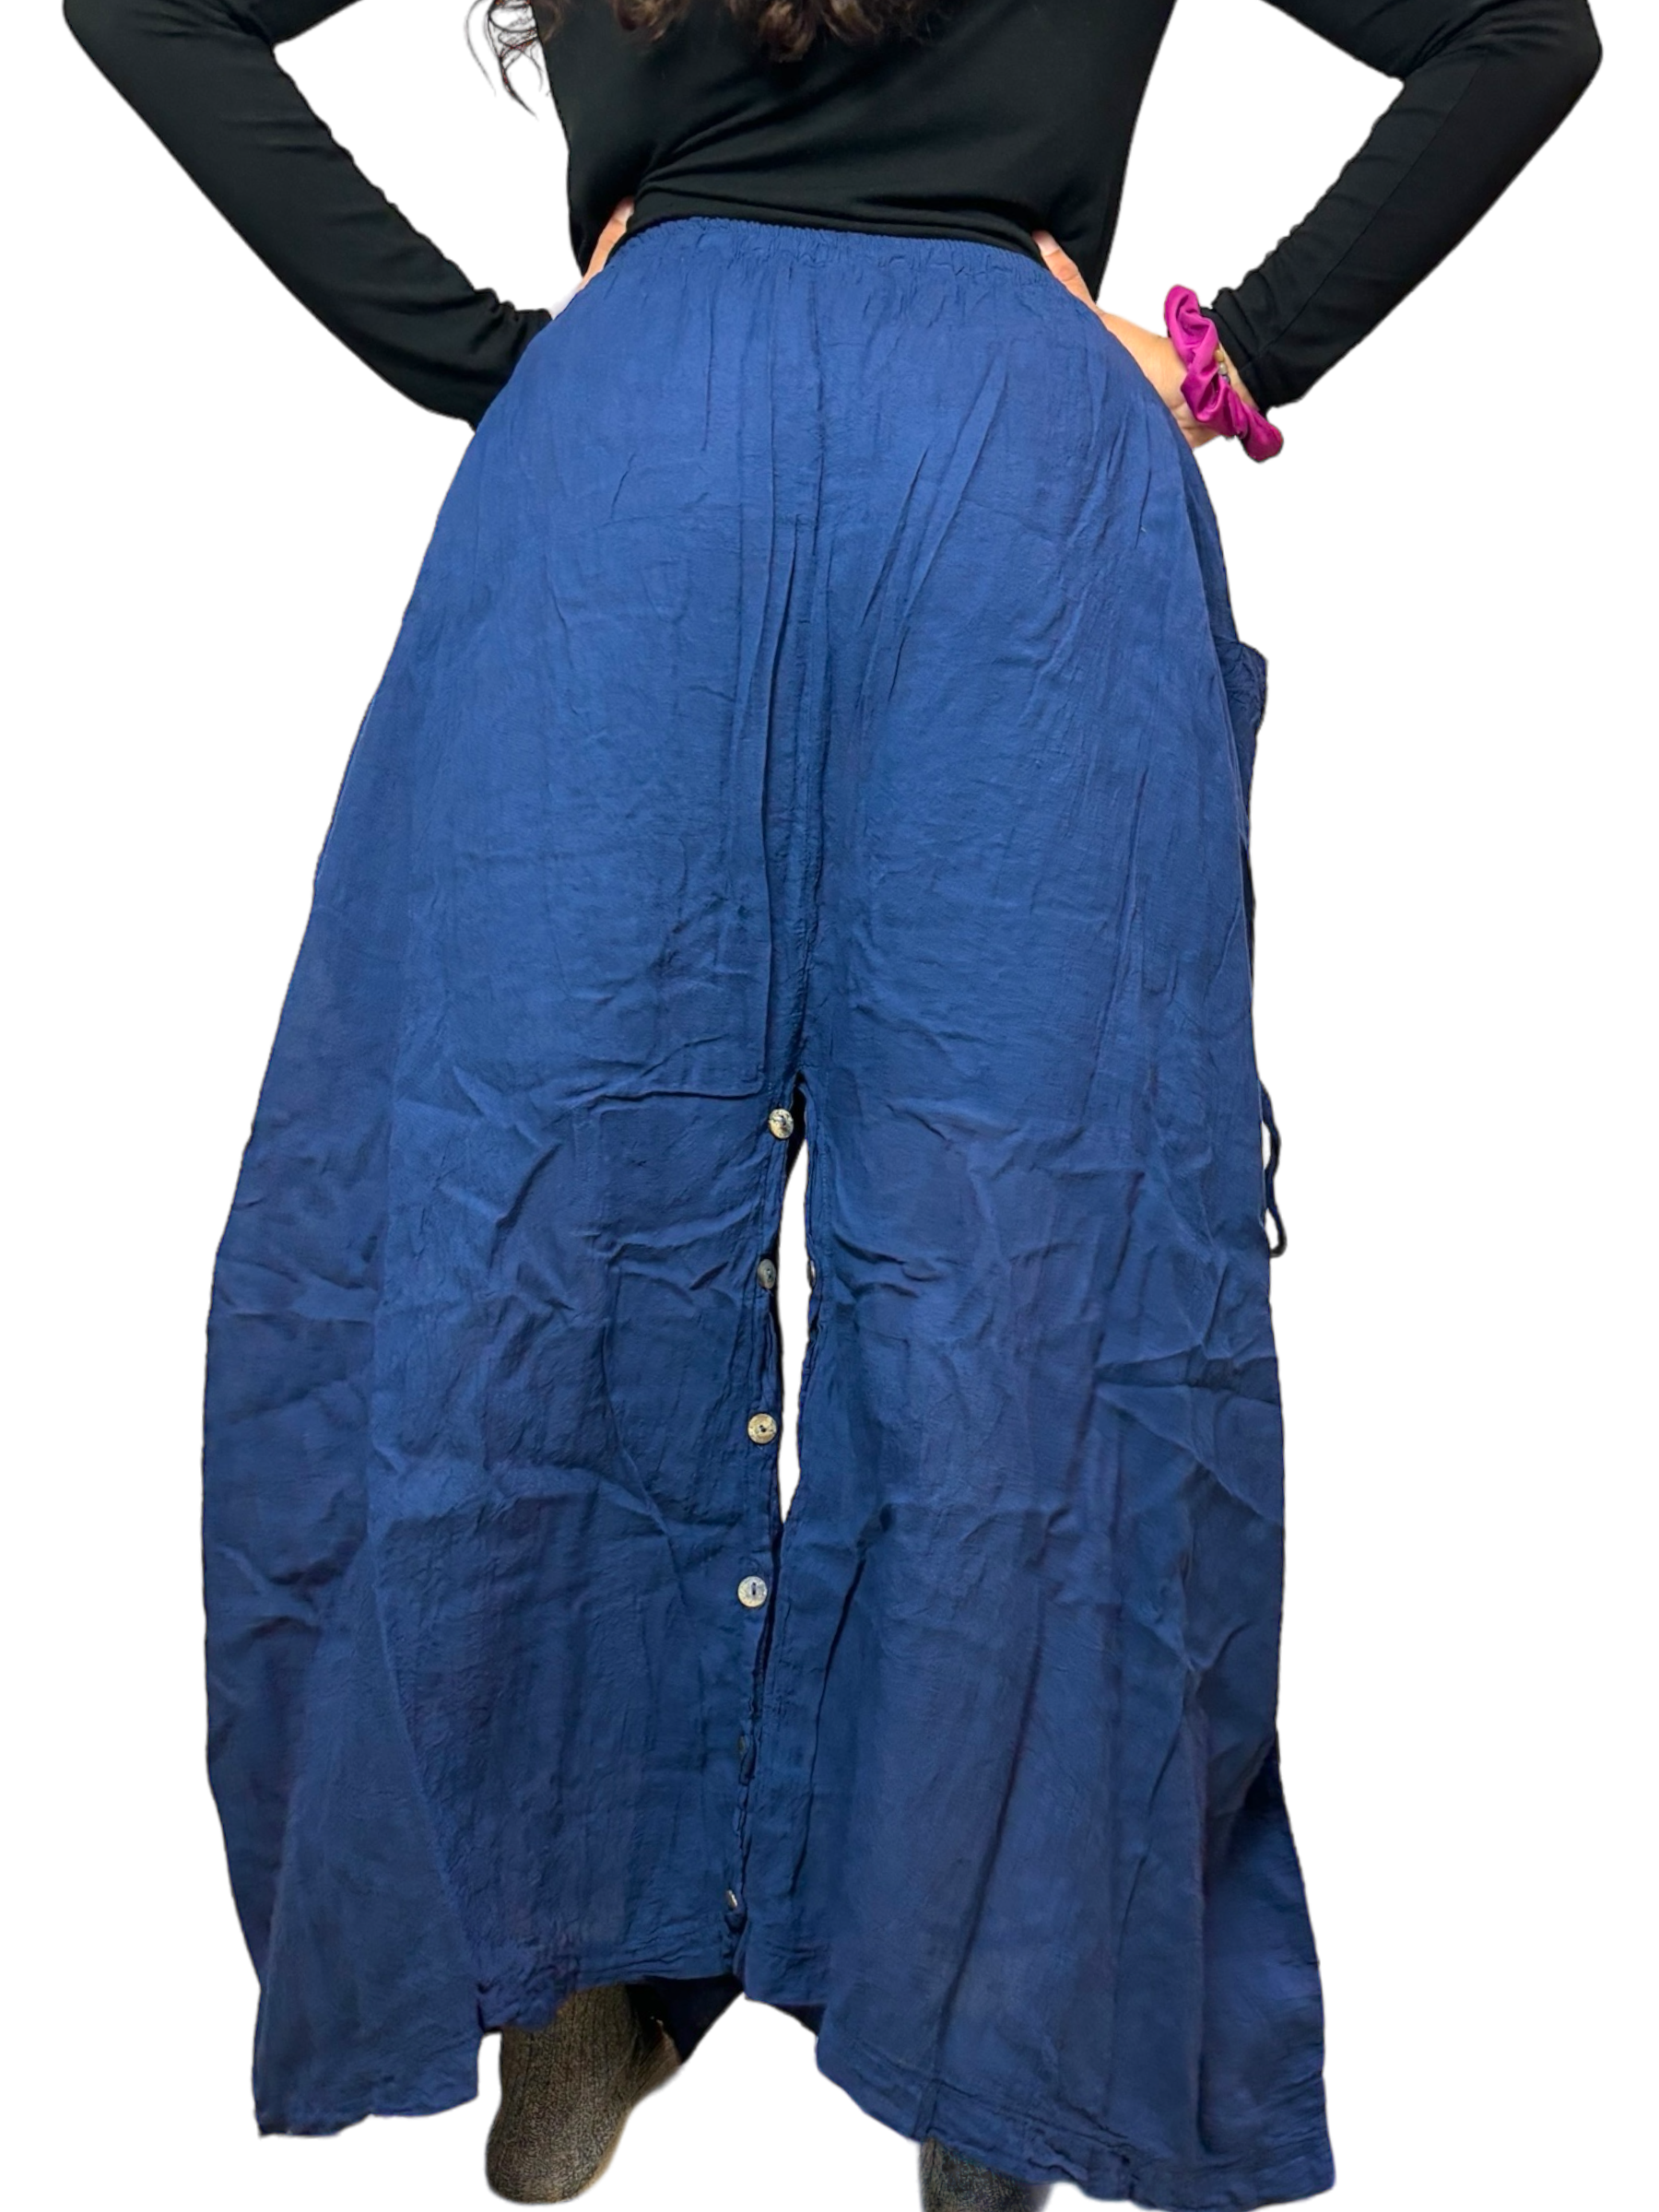 Ocean Blue Cotton Voile Tashi Versatile Pants/Skirt